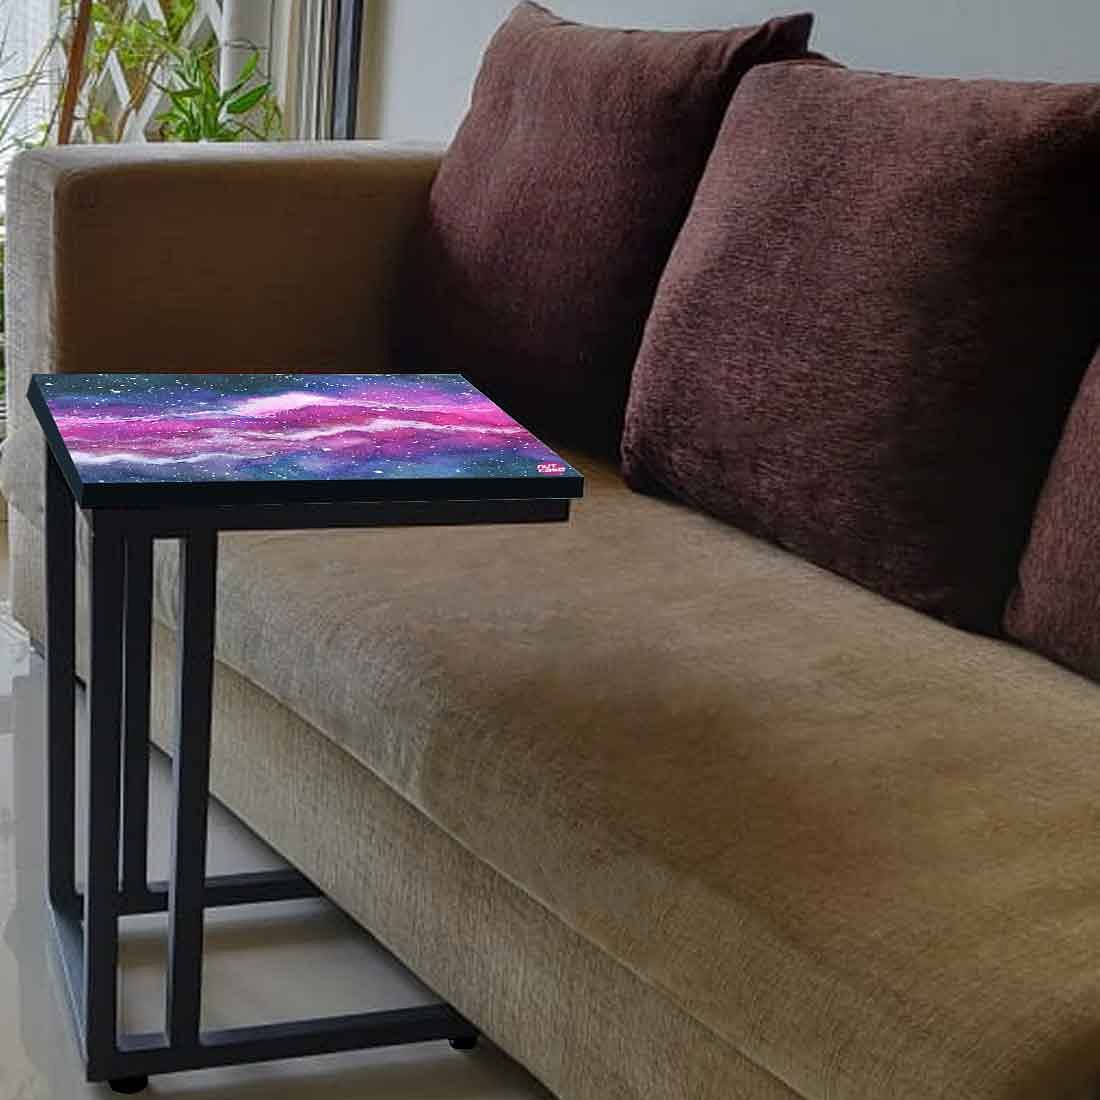 Beautiful Black C Shaped Table - Space Purple Watercolor Nutcase